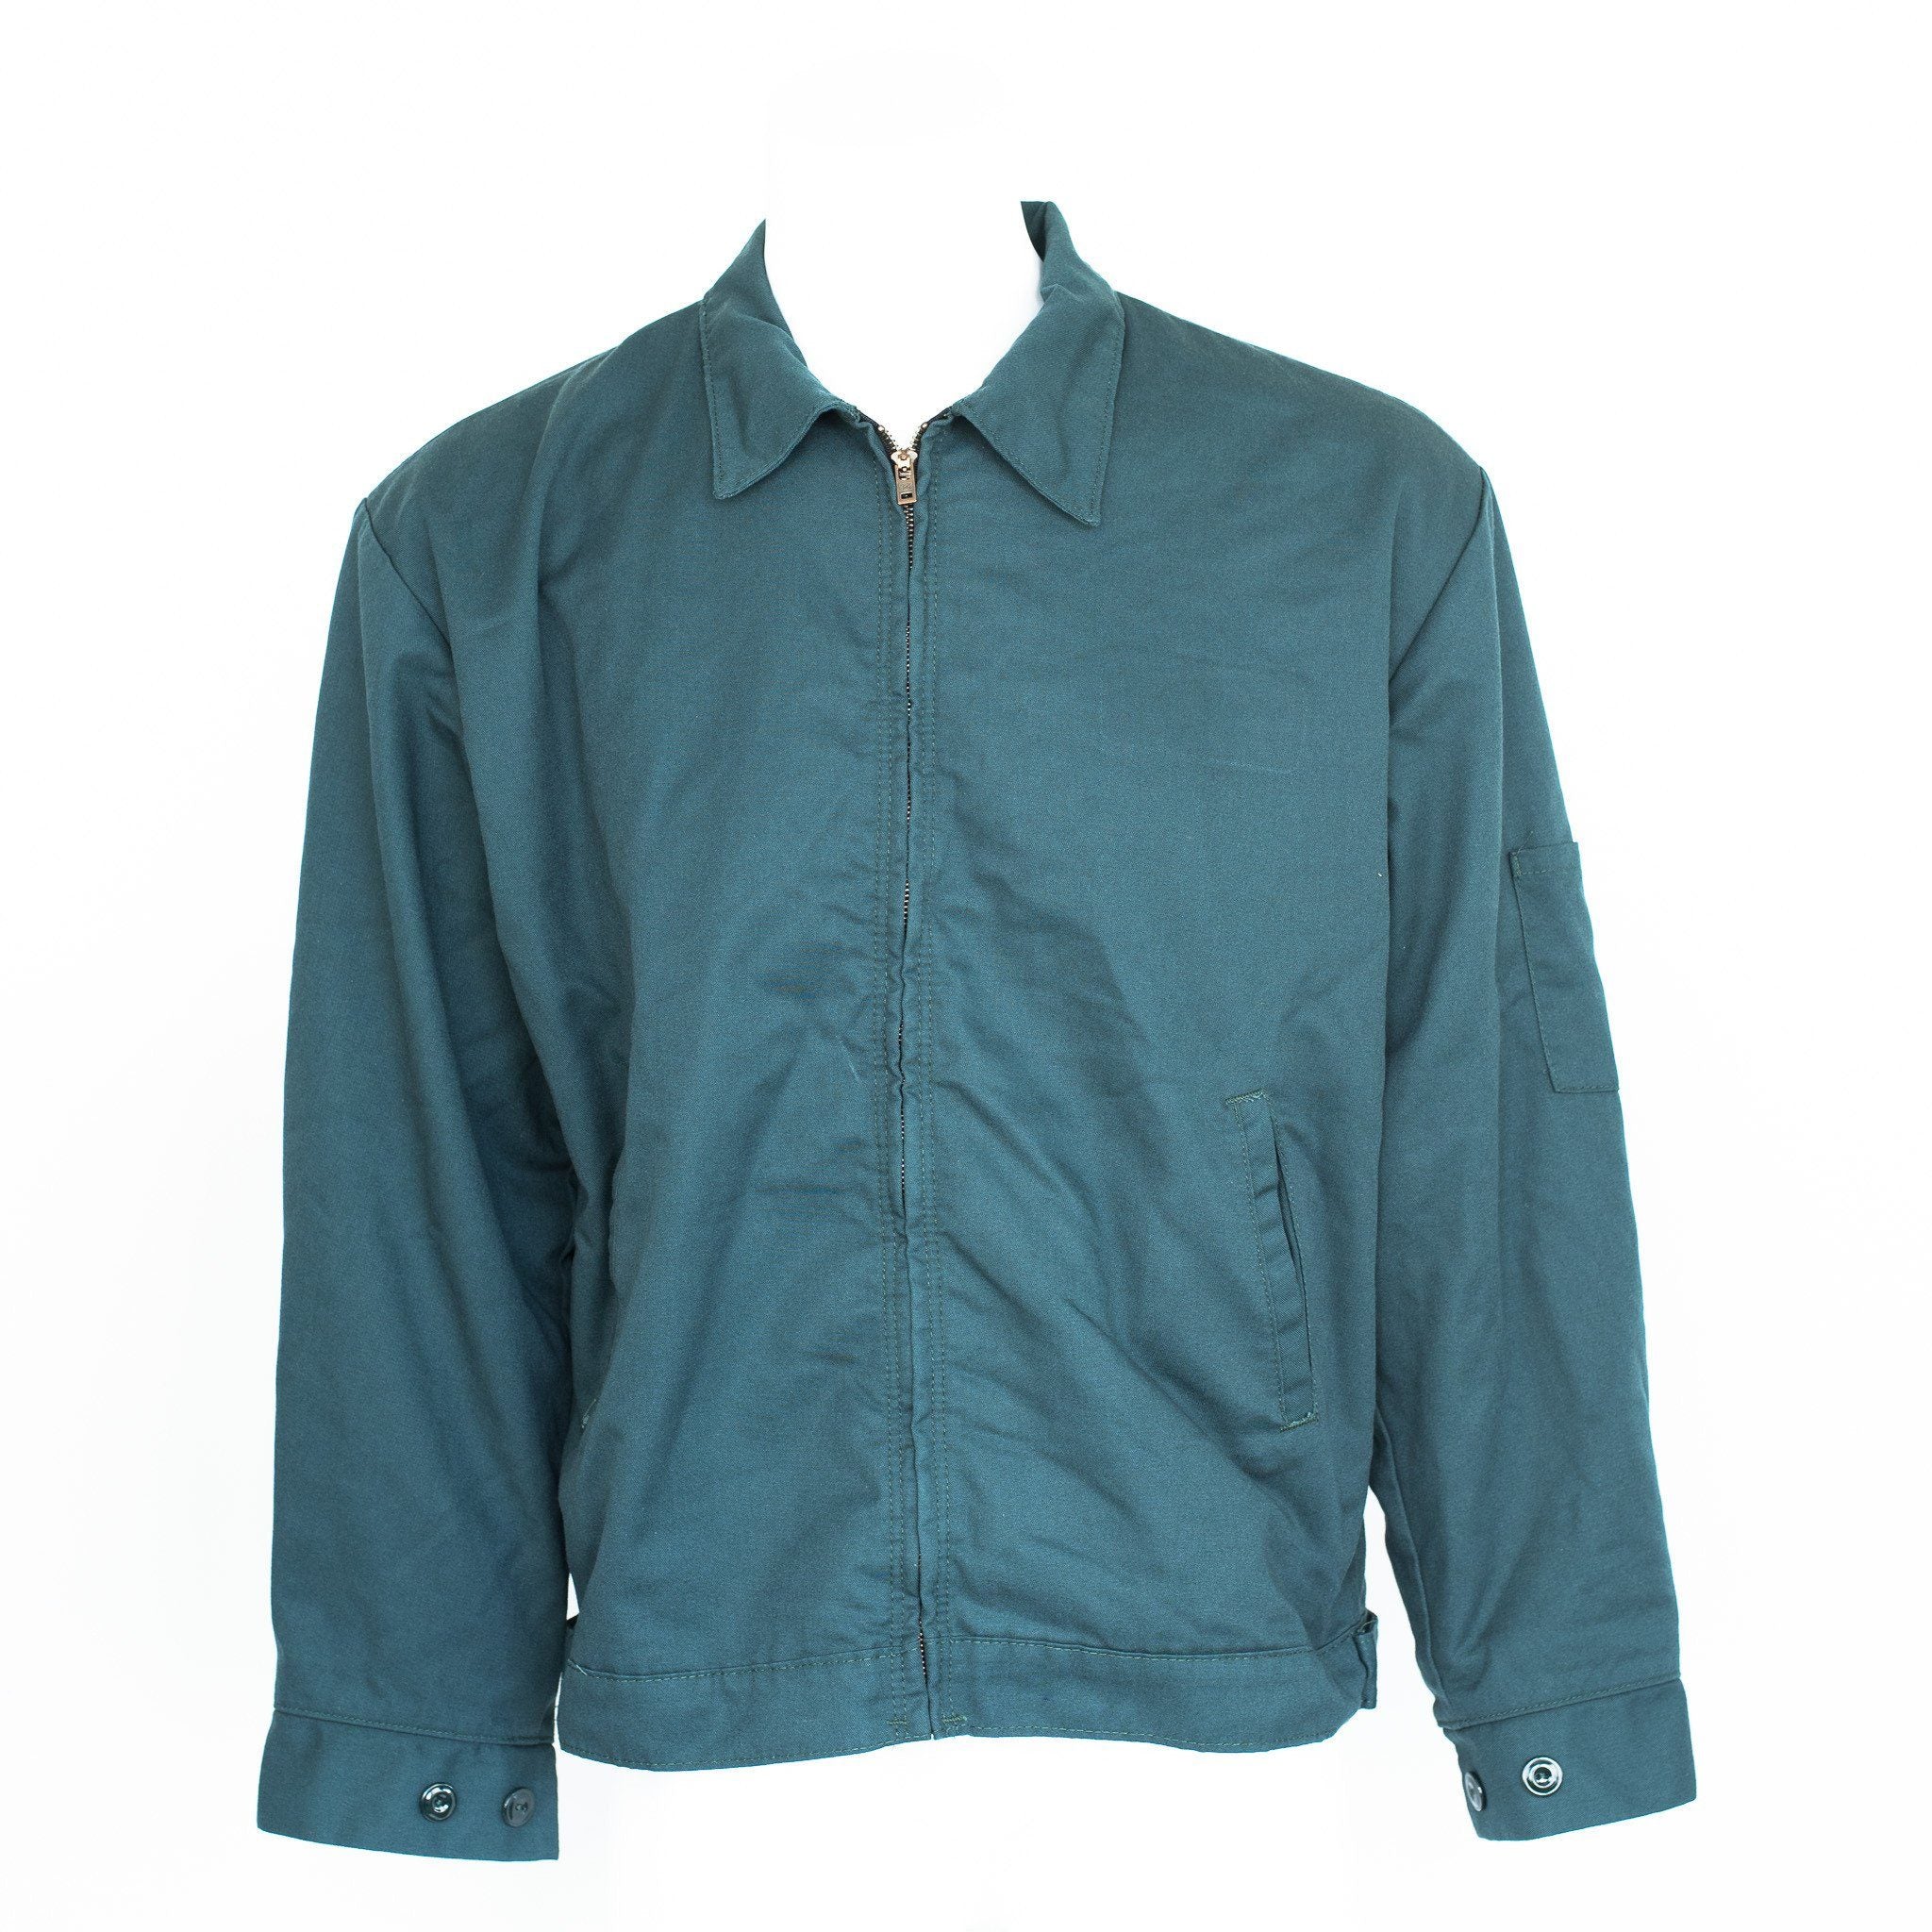 Used Lined Work Jacket - Fold Collar | Walt's Used Workwear